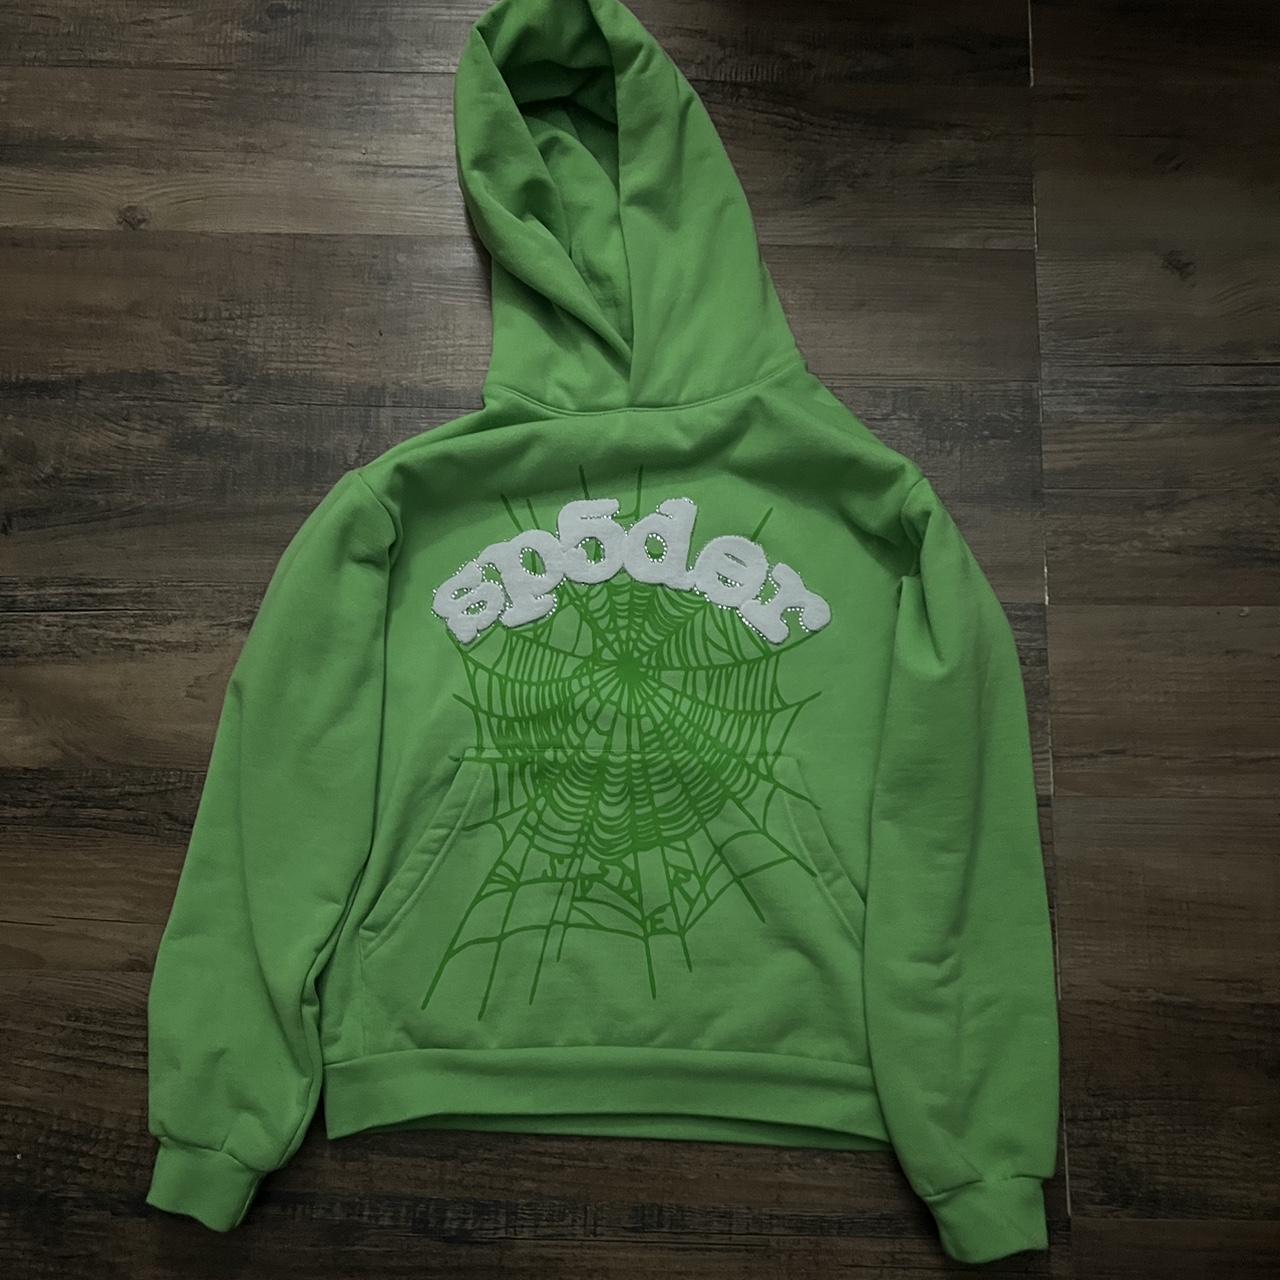 Slime green sp5der hoodie - Size small - Good... - Depop